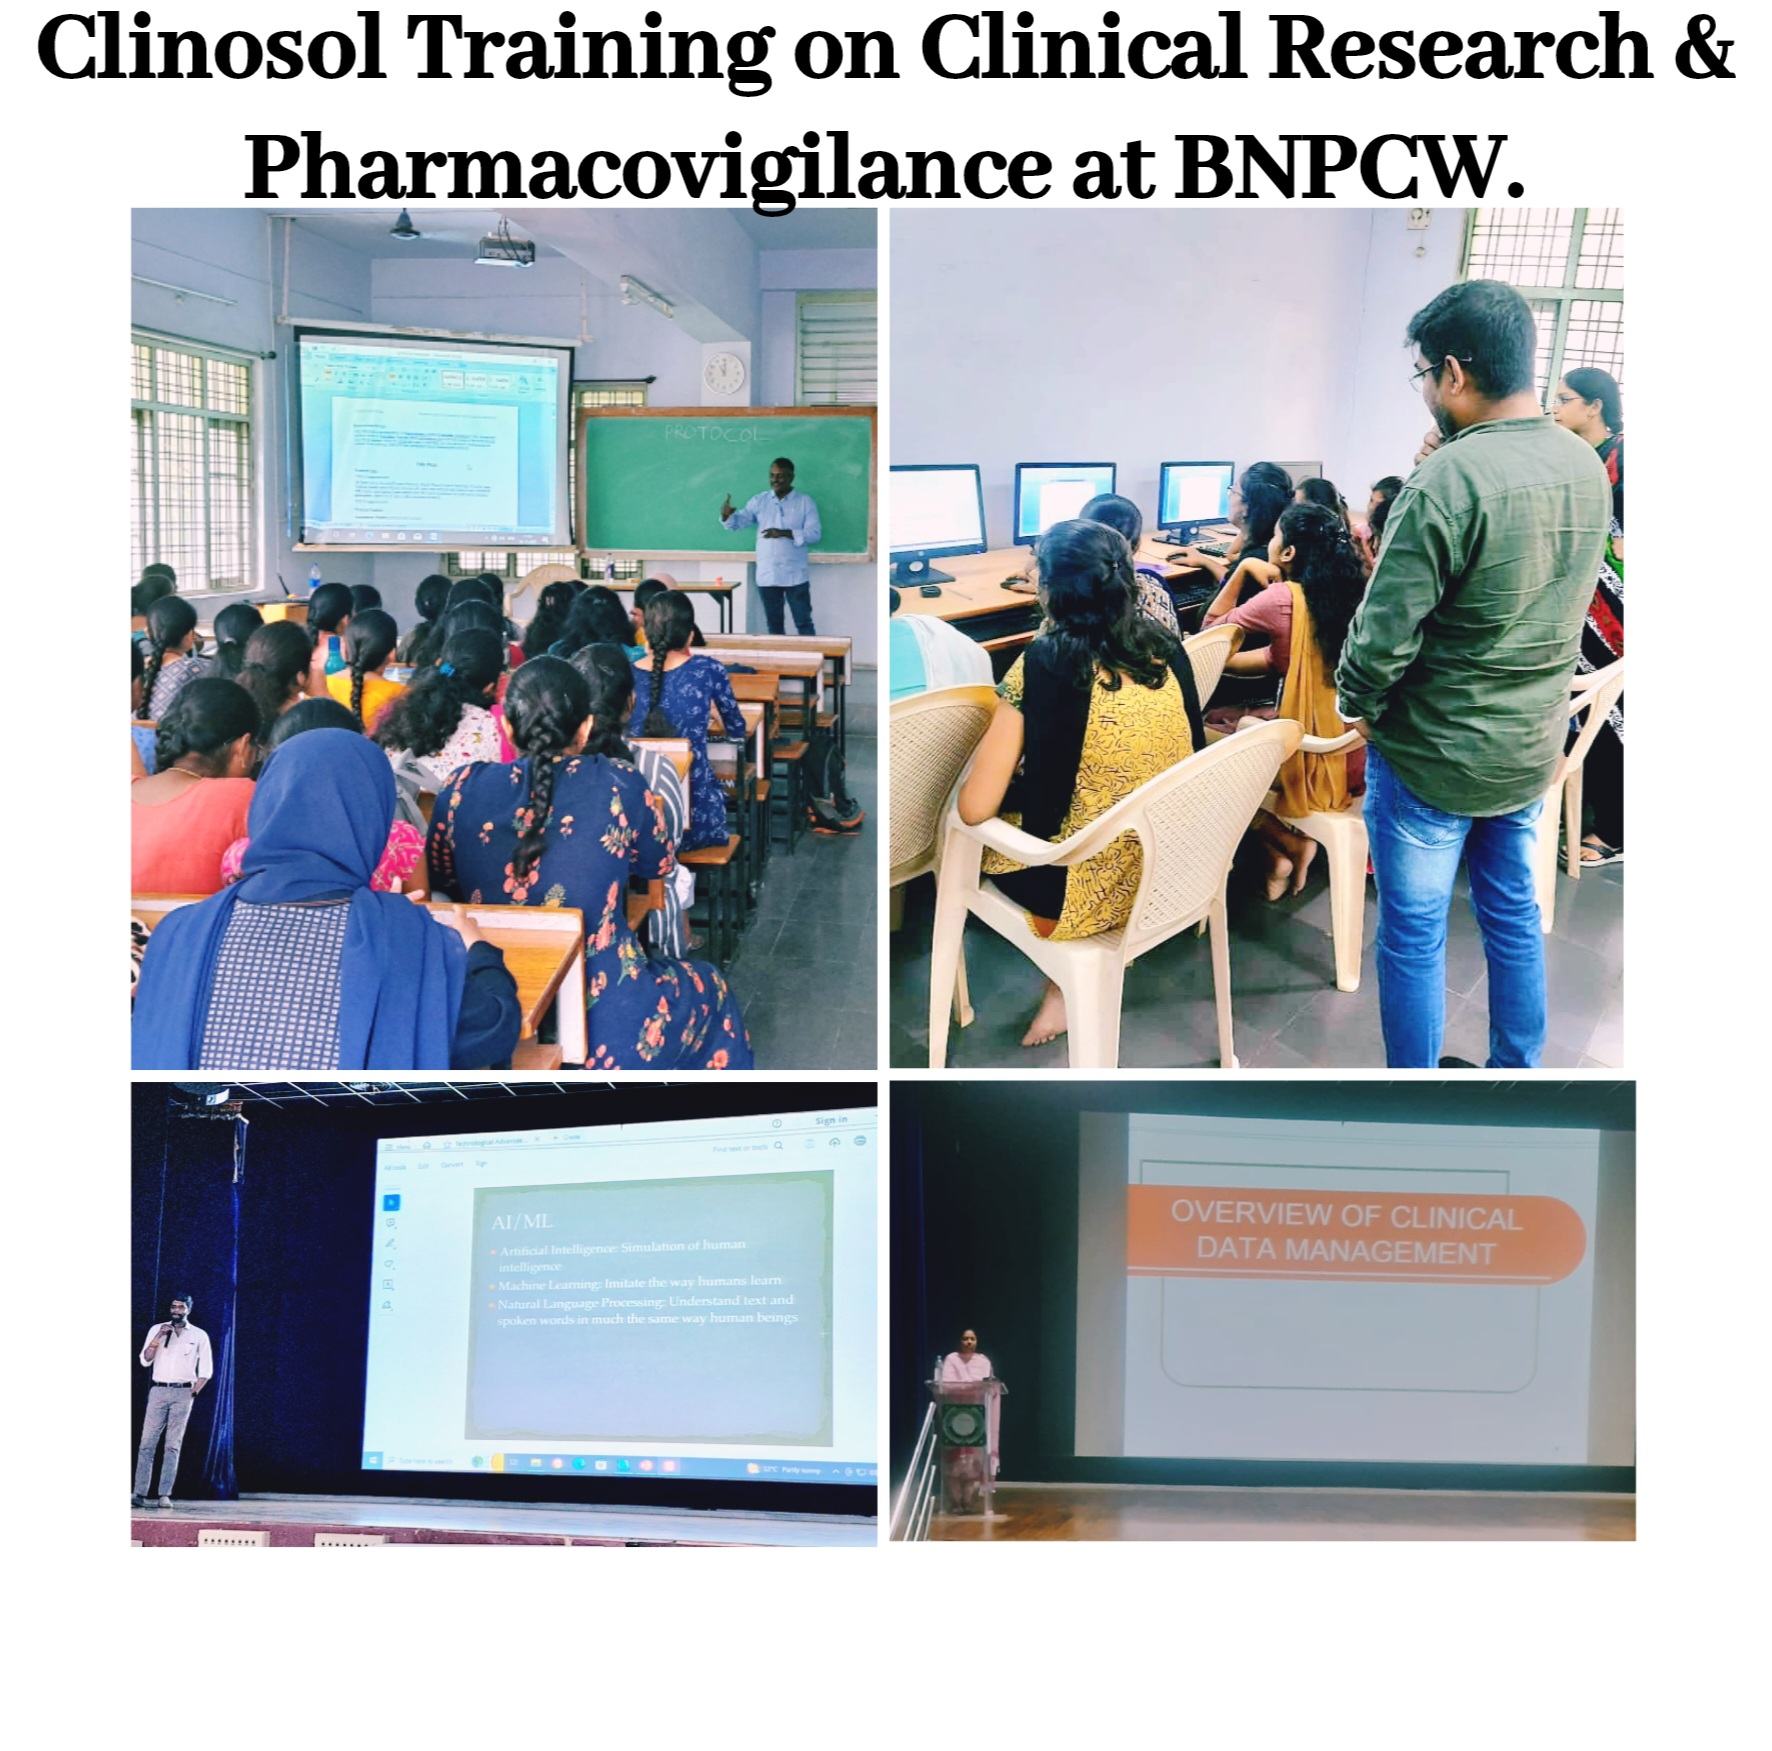 Clinosol Training on Clinical Research & Pharmacovigilance at BNPCW